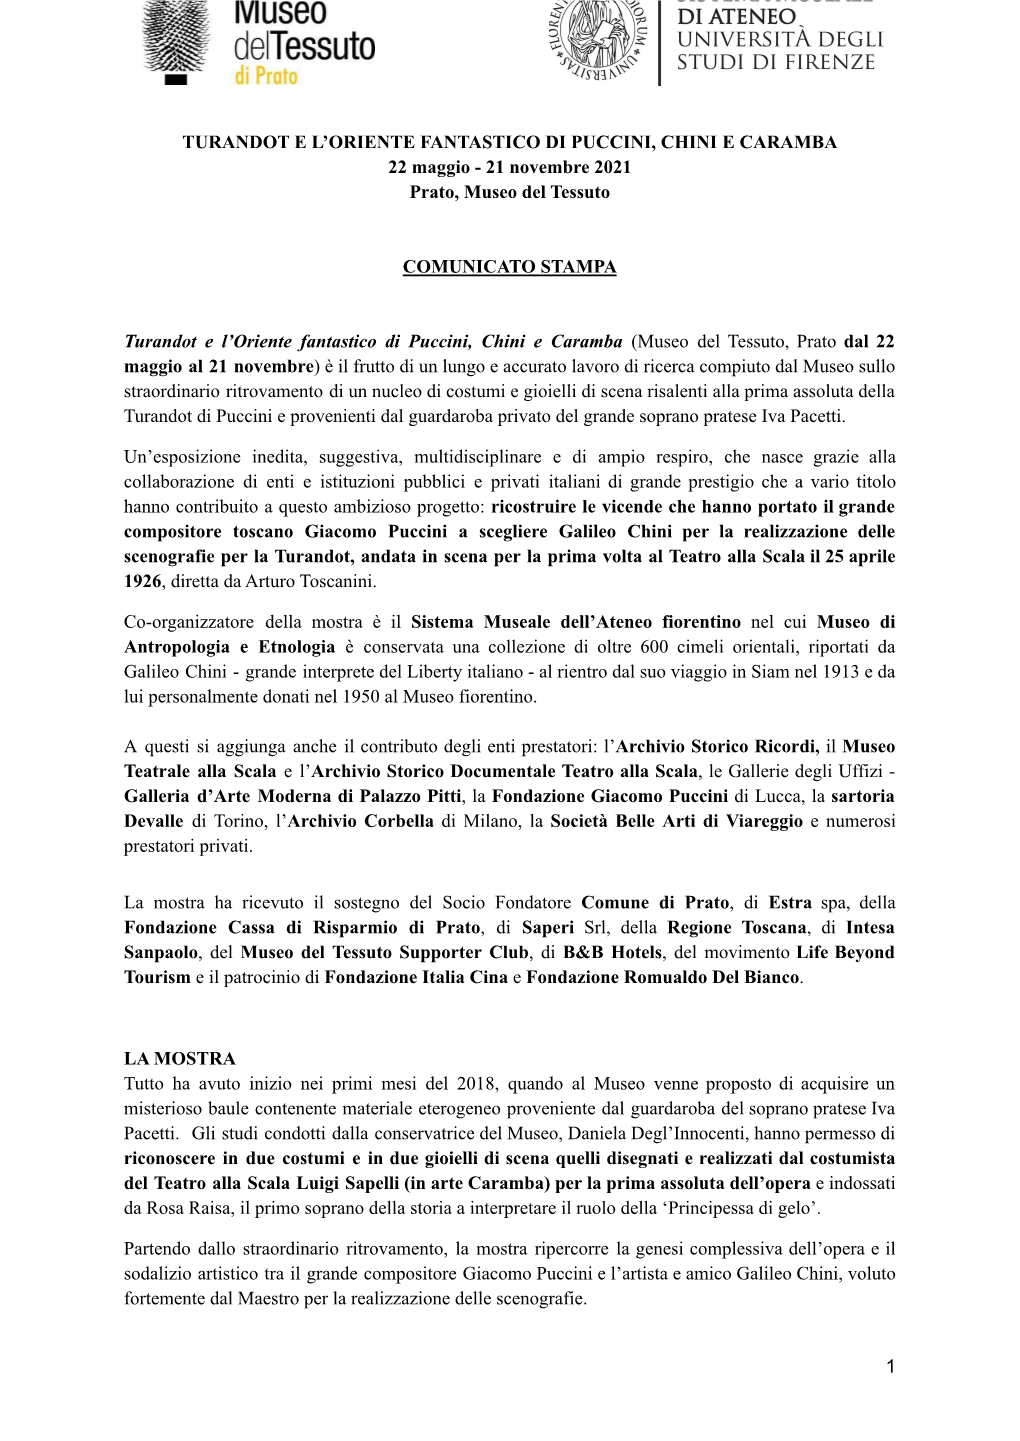 Comunicato Stampa Turandot 20.05.21.Docx